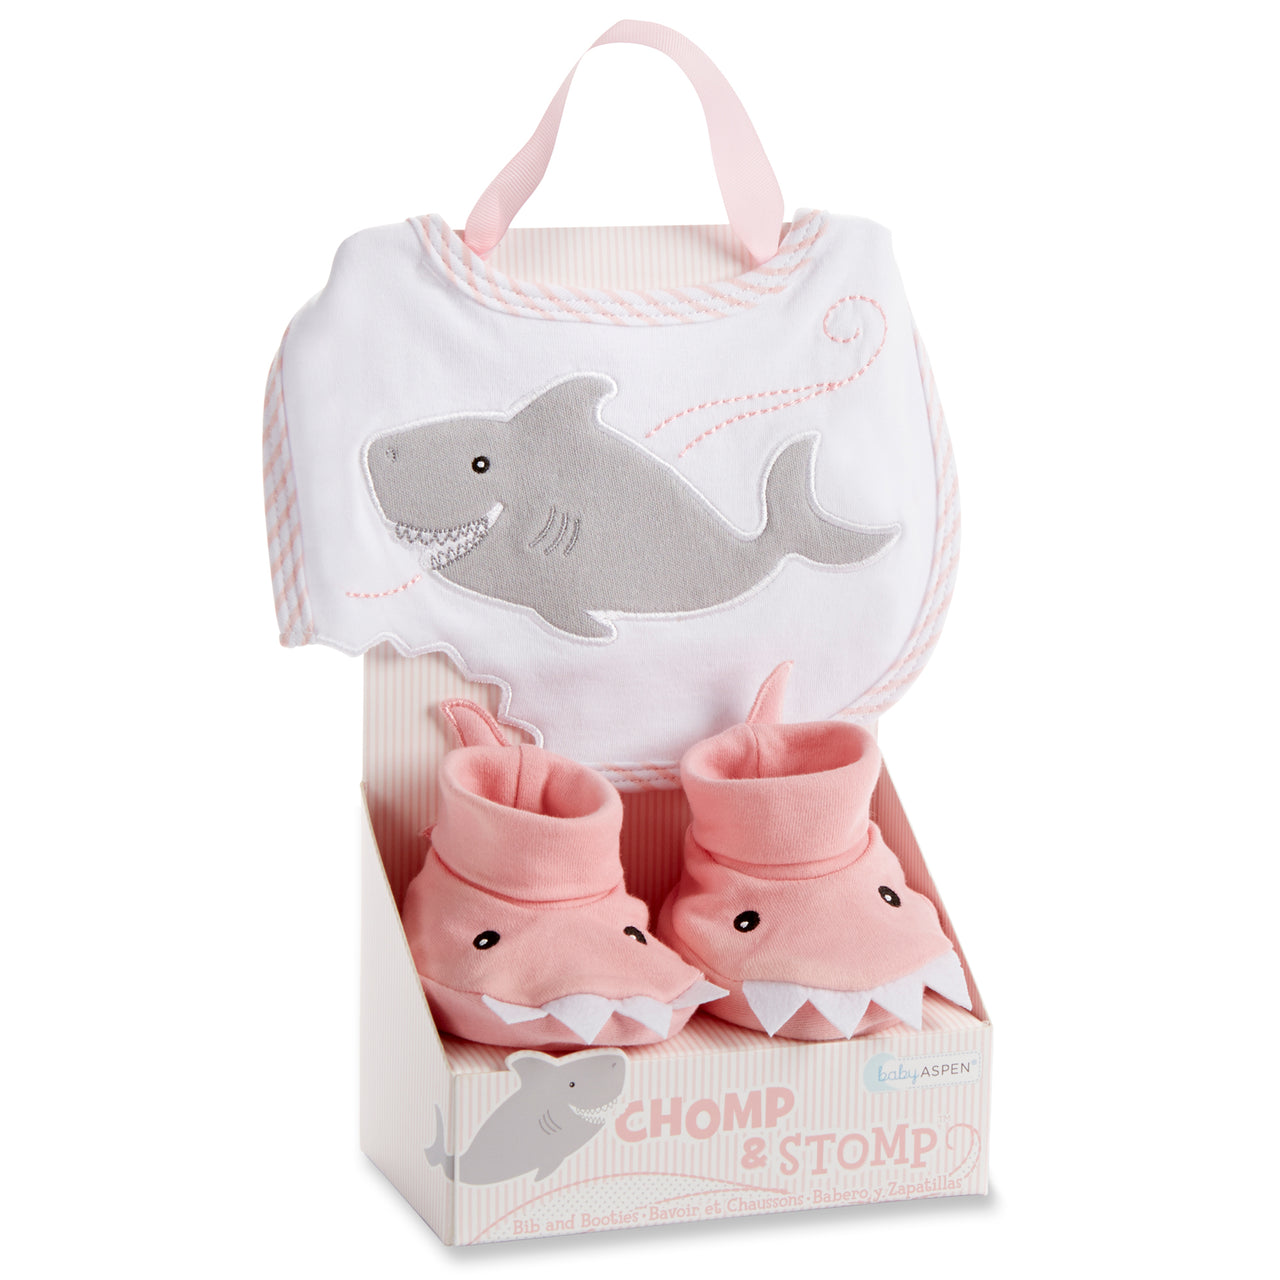 Chomp & Stomp Baby Gifts Set Booties Baby Bib & – (Pink) | Shark Aspen Baby Gifts Aspen Gift